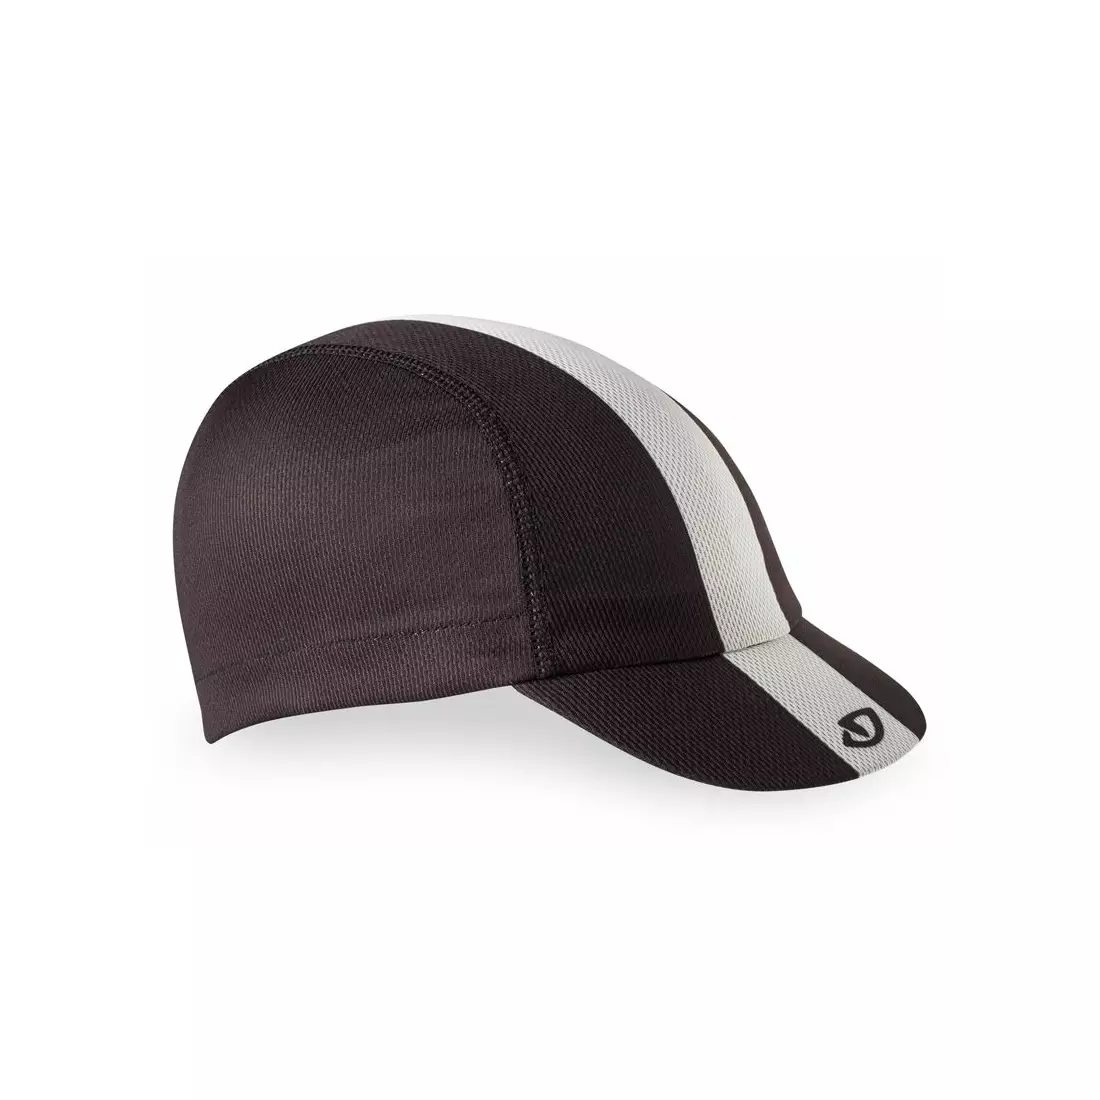 GIRO cycling cap with a visor CAP black white grey GR-7043336